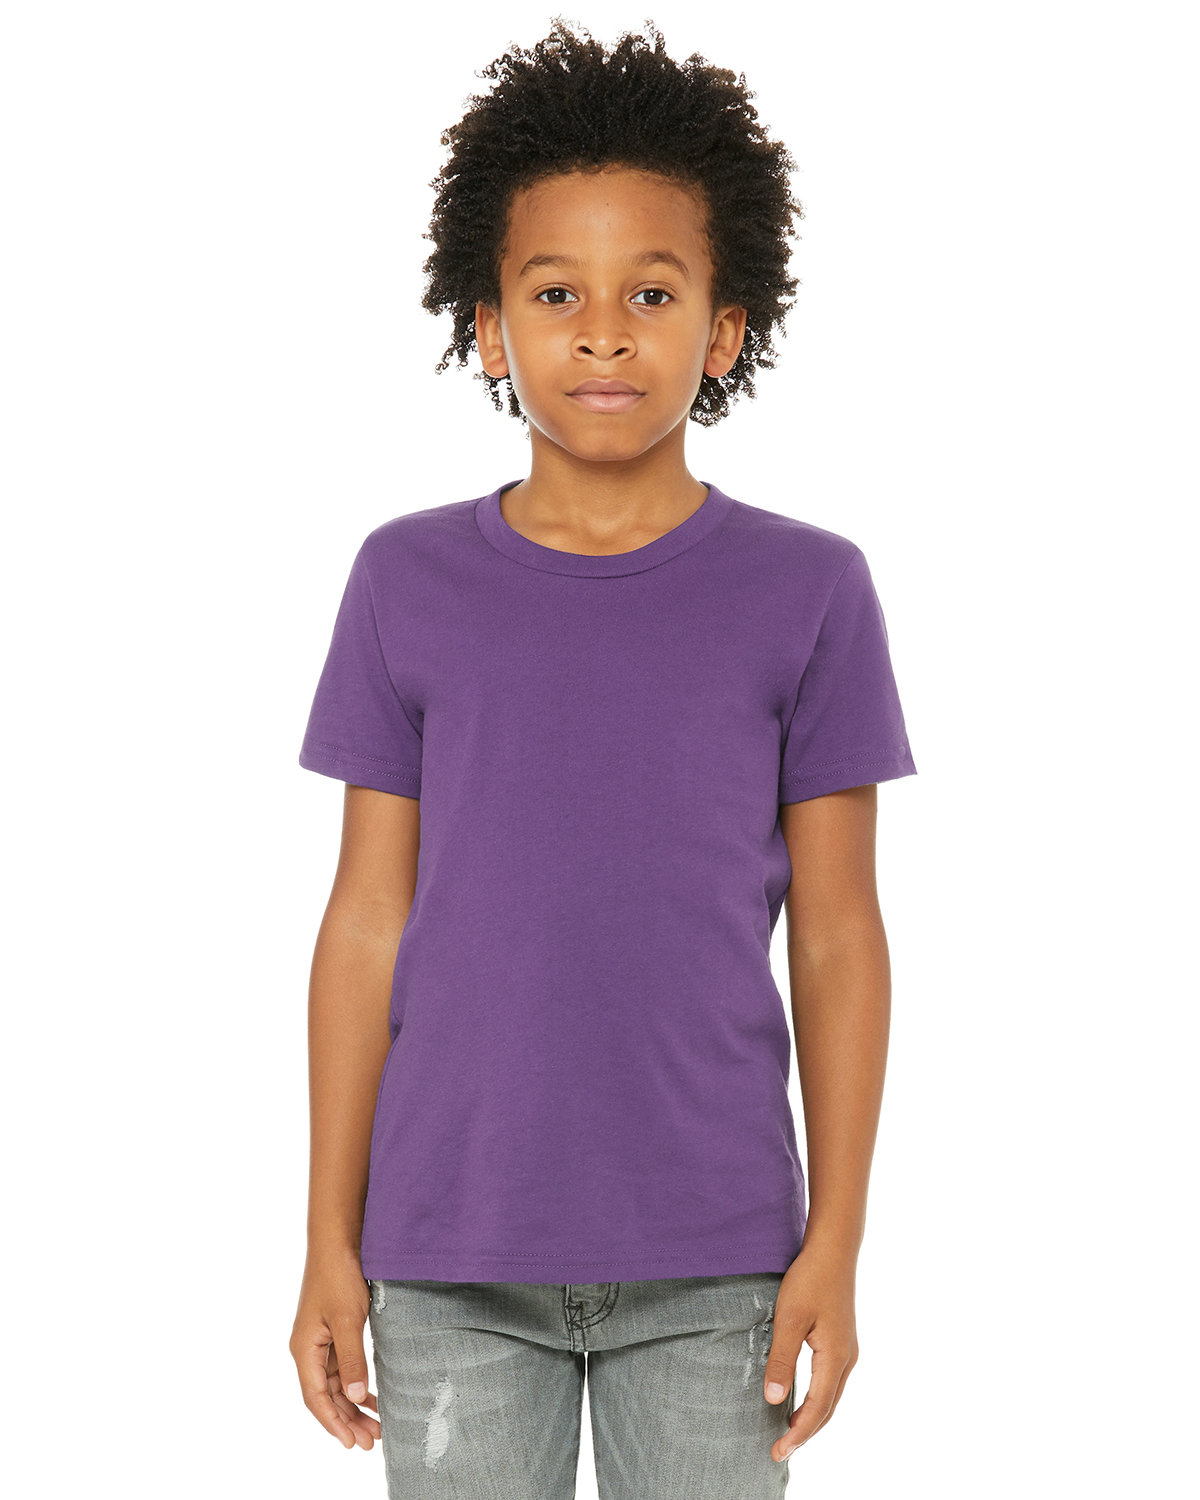 Bella + Canvas Youth Jersey T-Shirt ROYAL PURPLE 